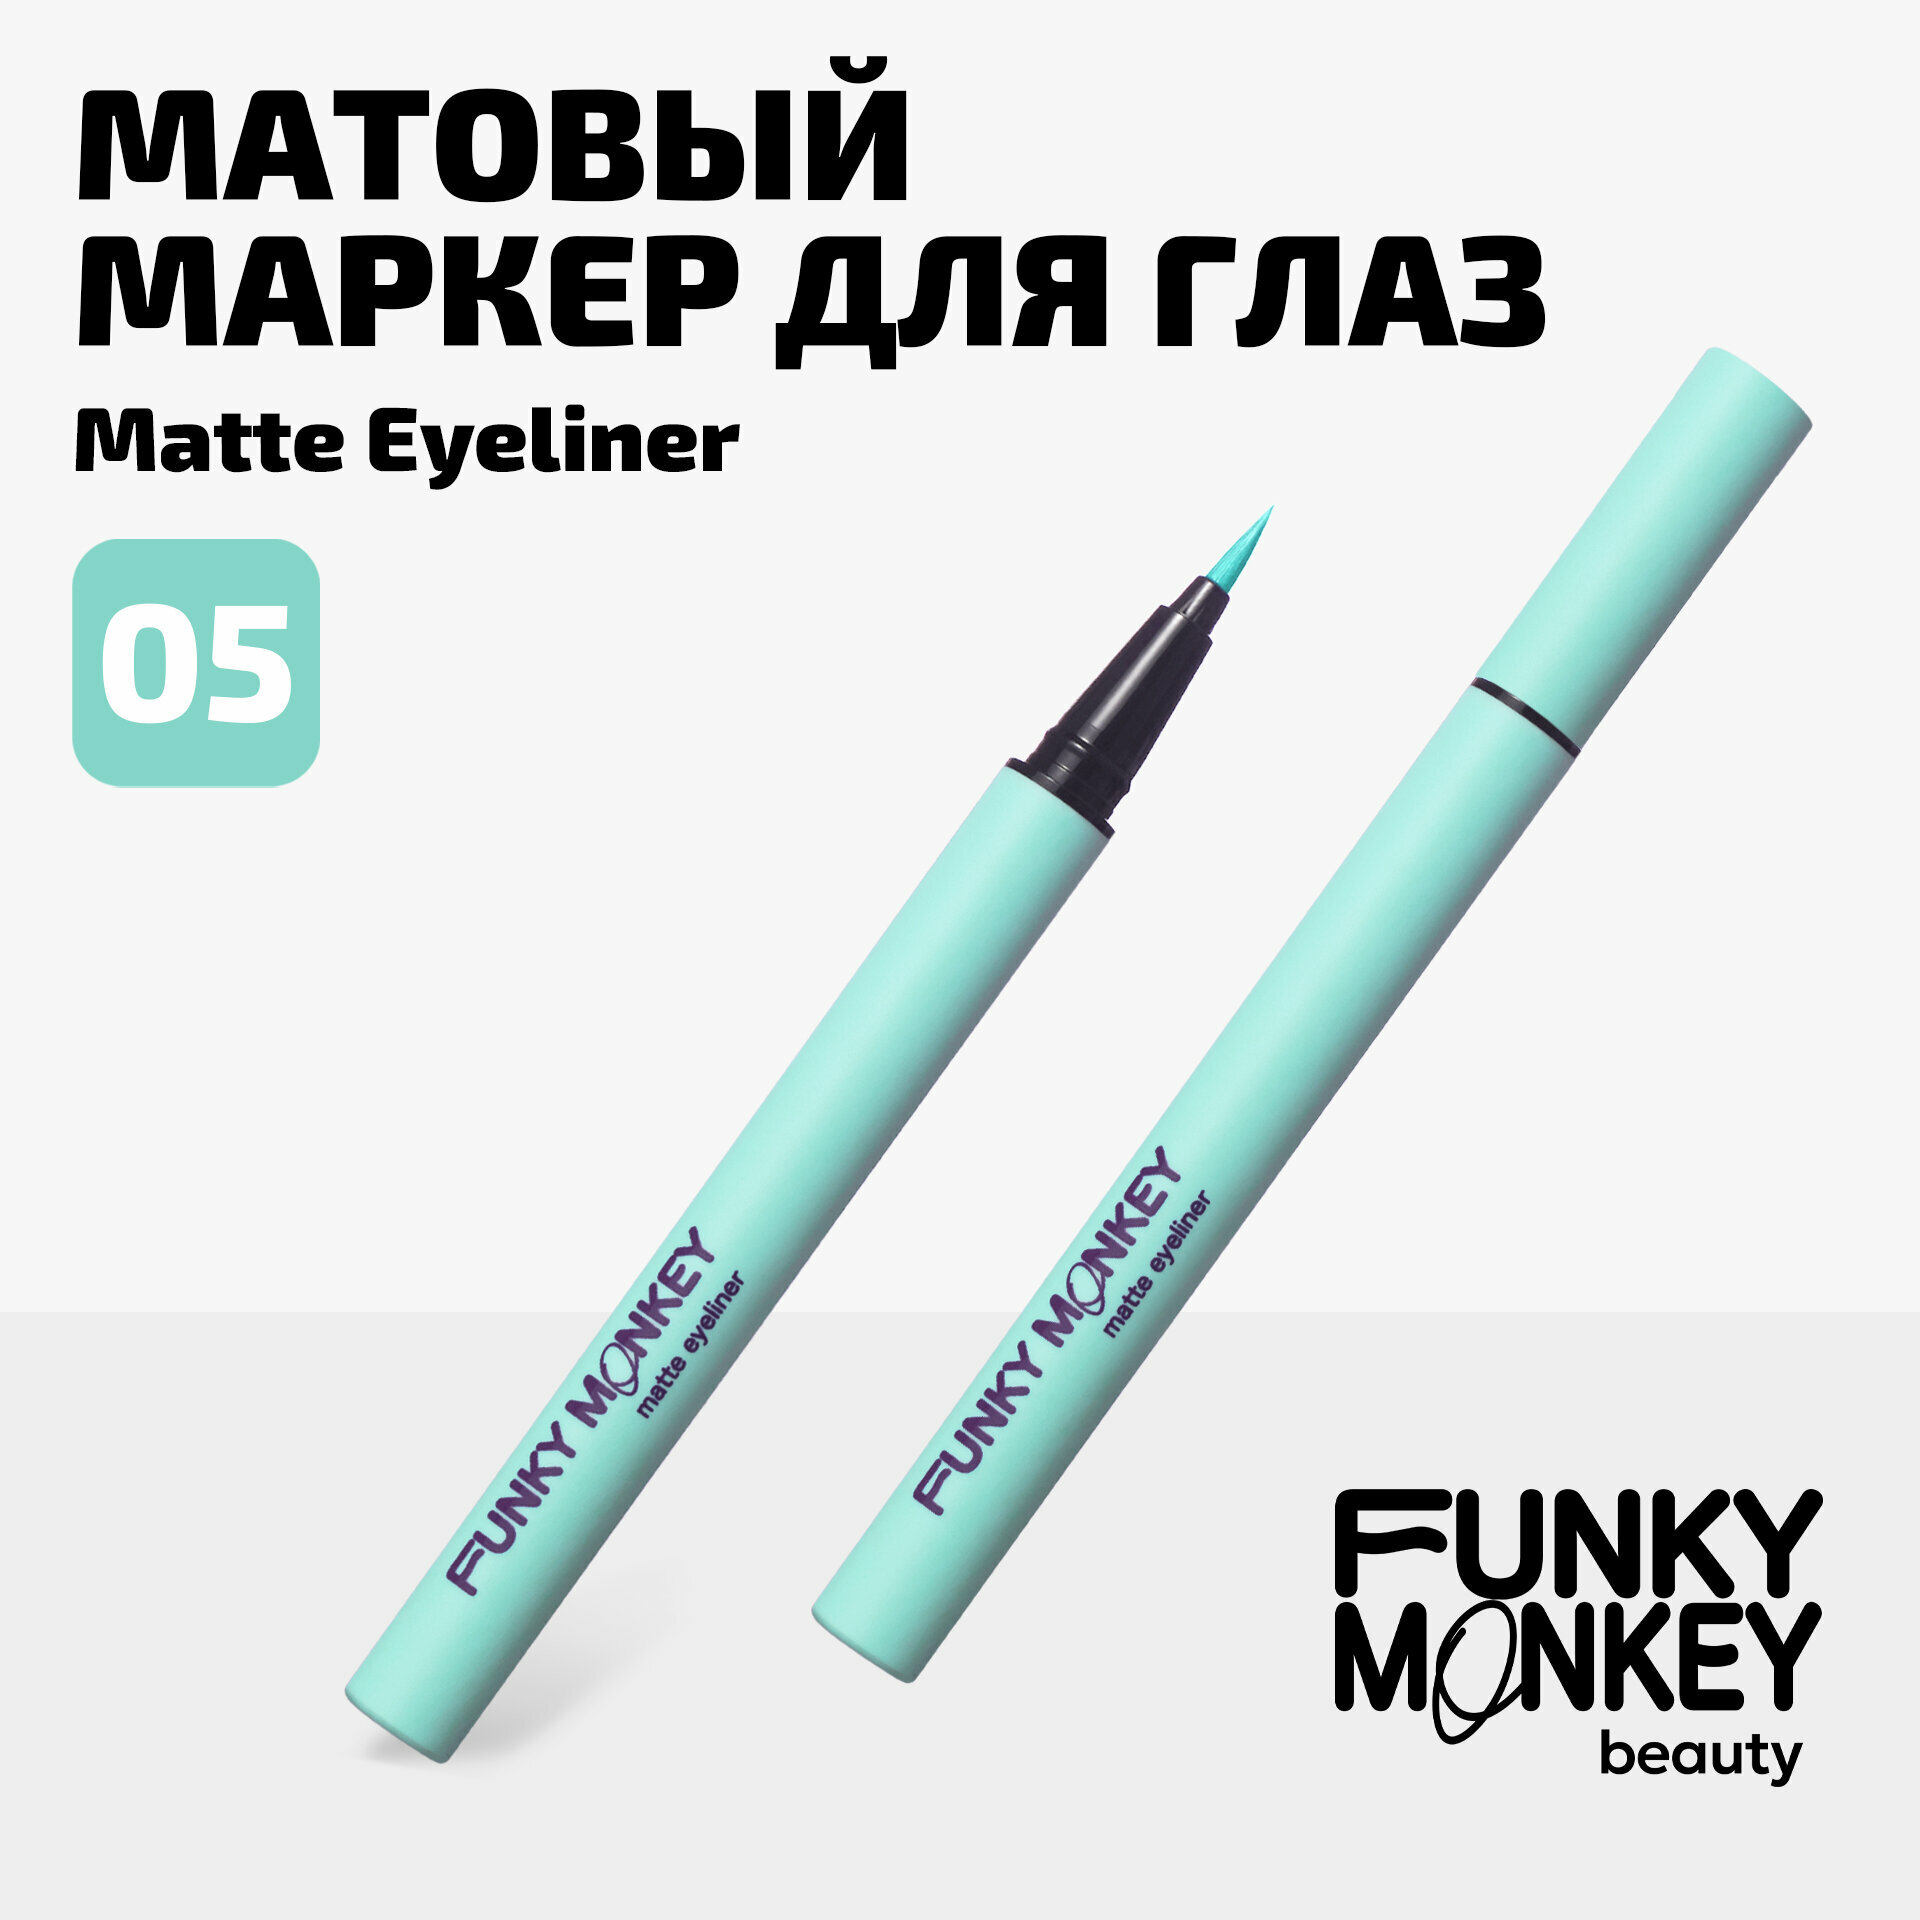 Funky Monkey Маркер для глаз матовый Matte eyeliner тон 05